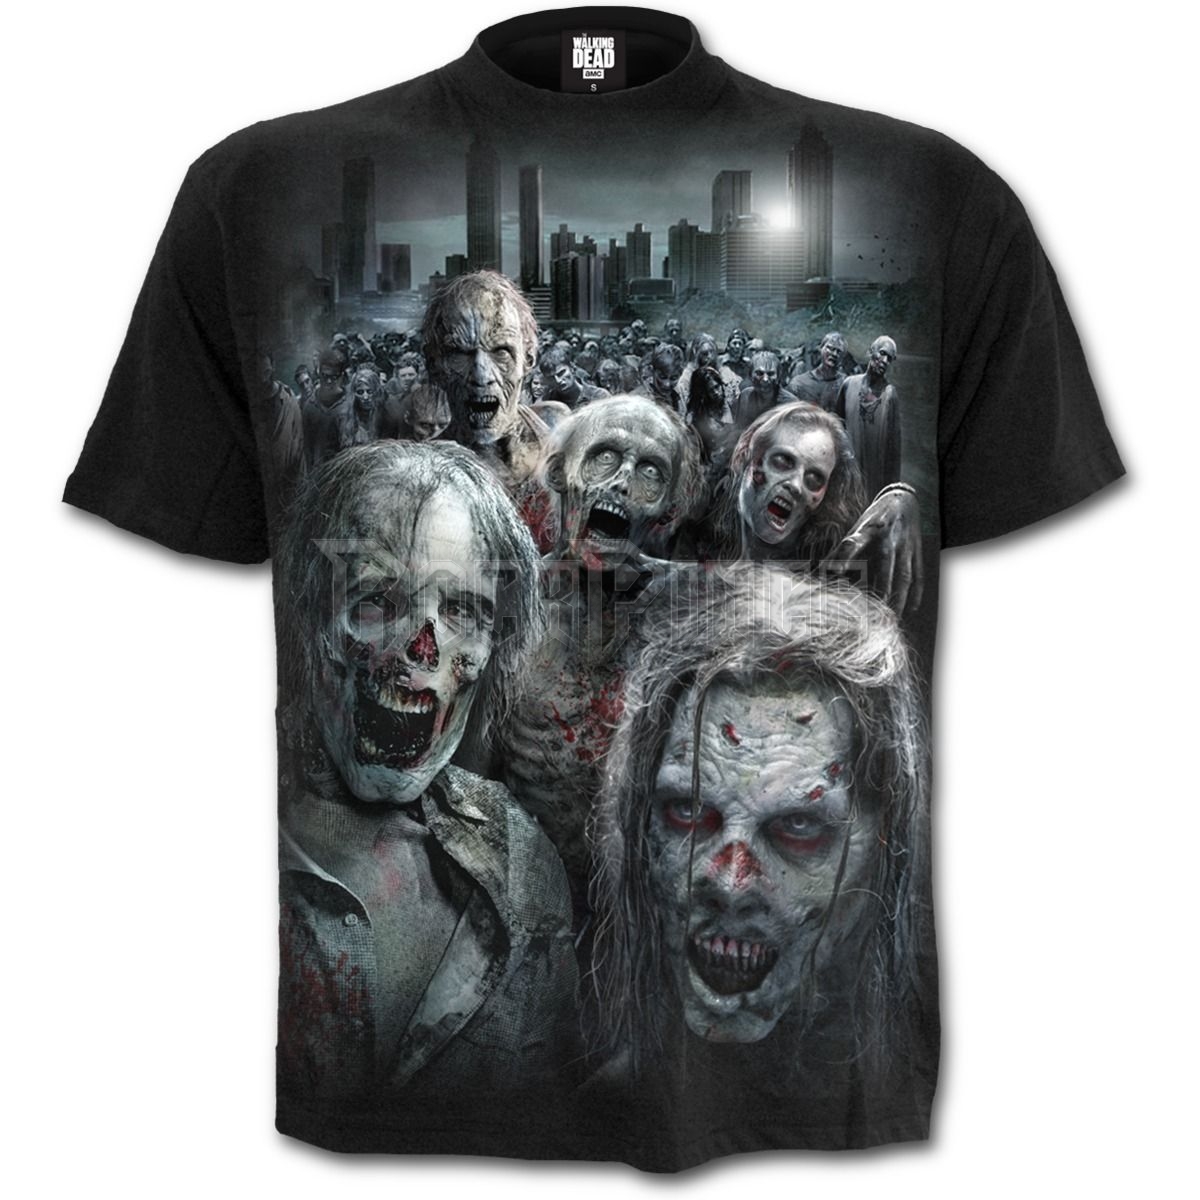 The Walking Dead - ZOMBIE HORDE - T-Shirt Black (Plain) - G005M127